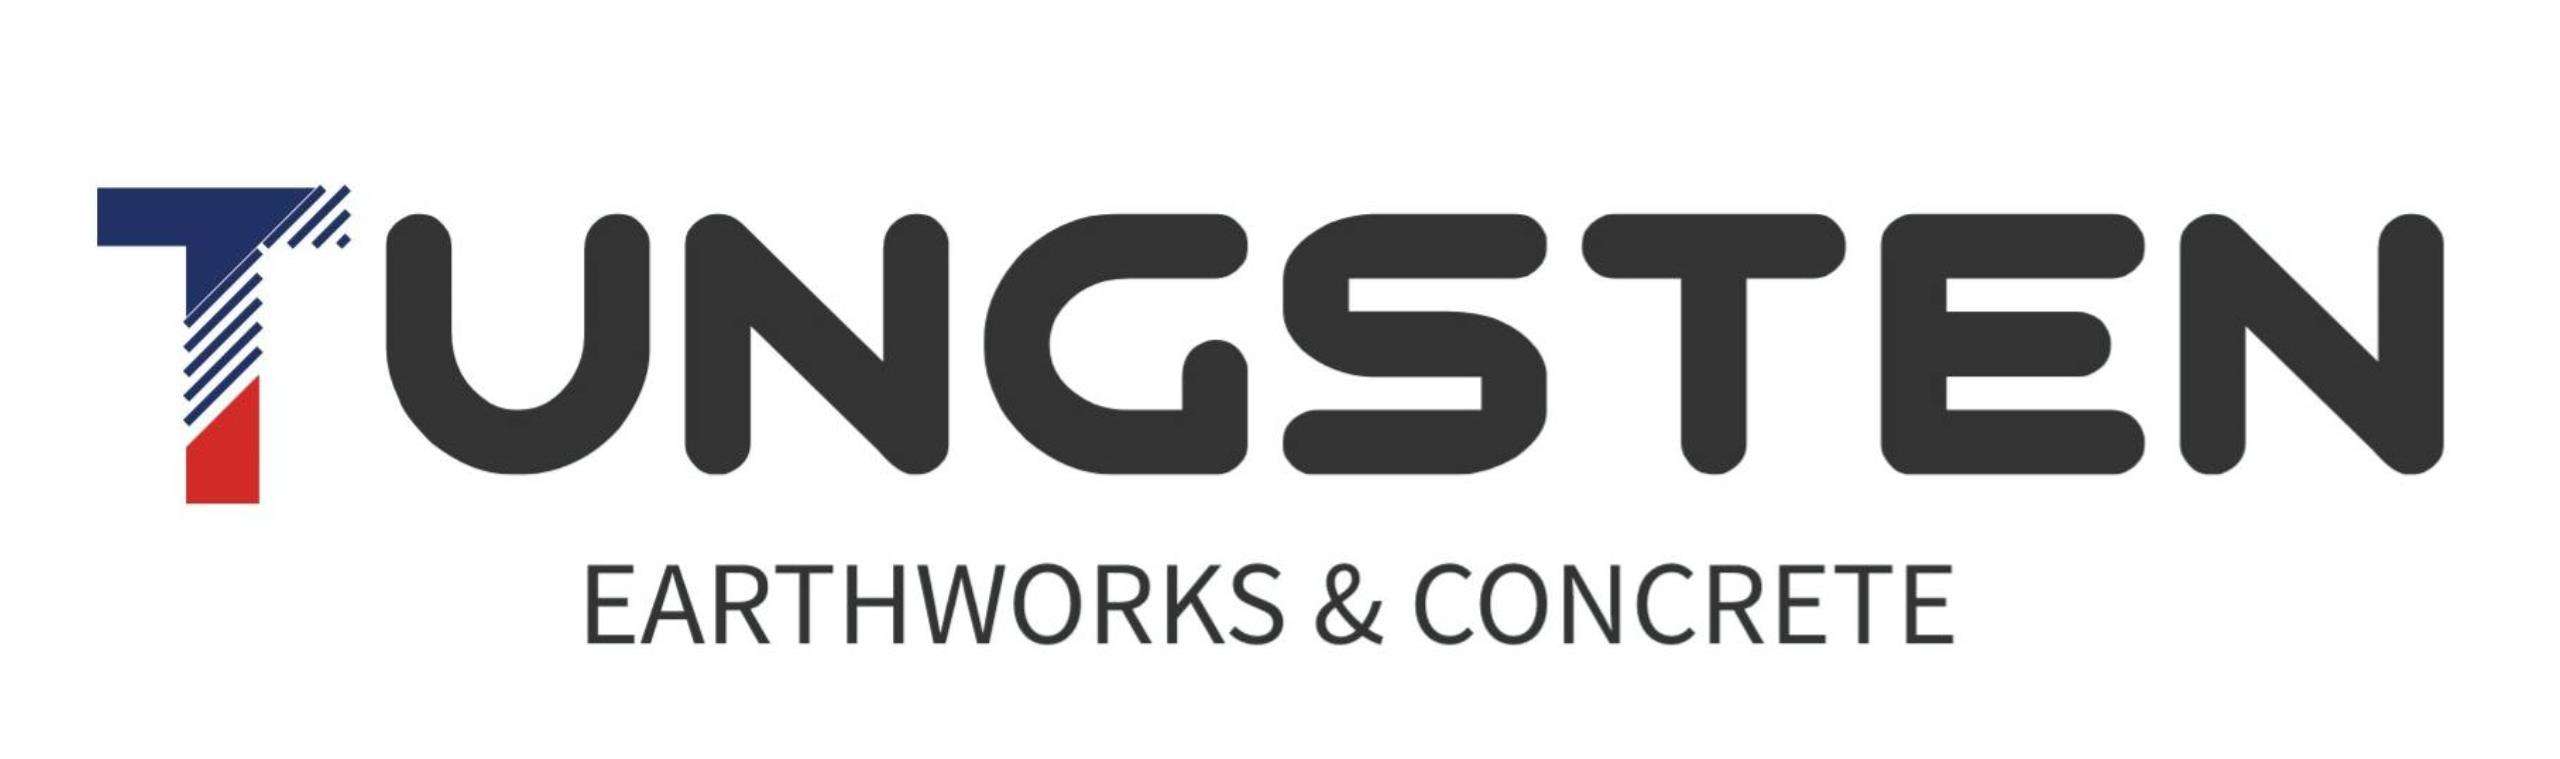 Tungsten Earthworks & Concrete, LLC Logo